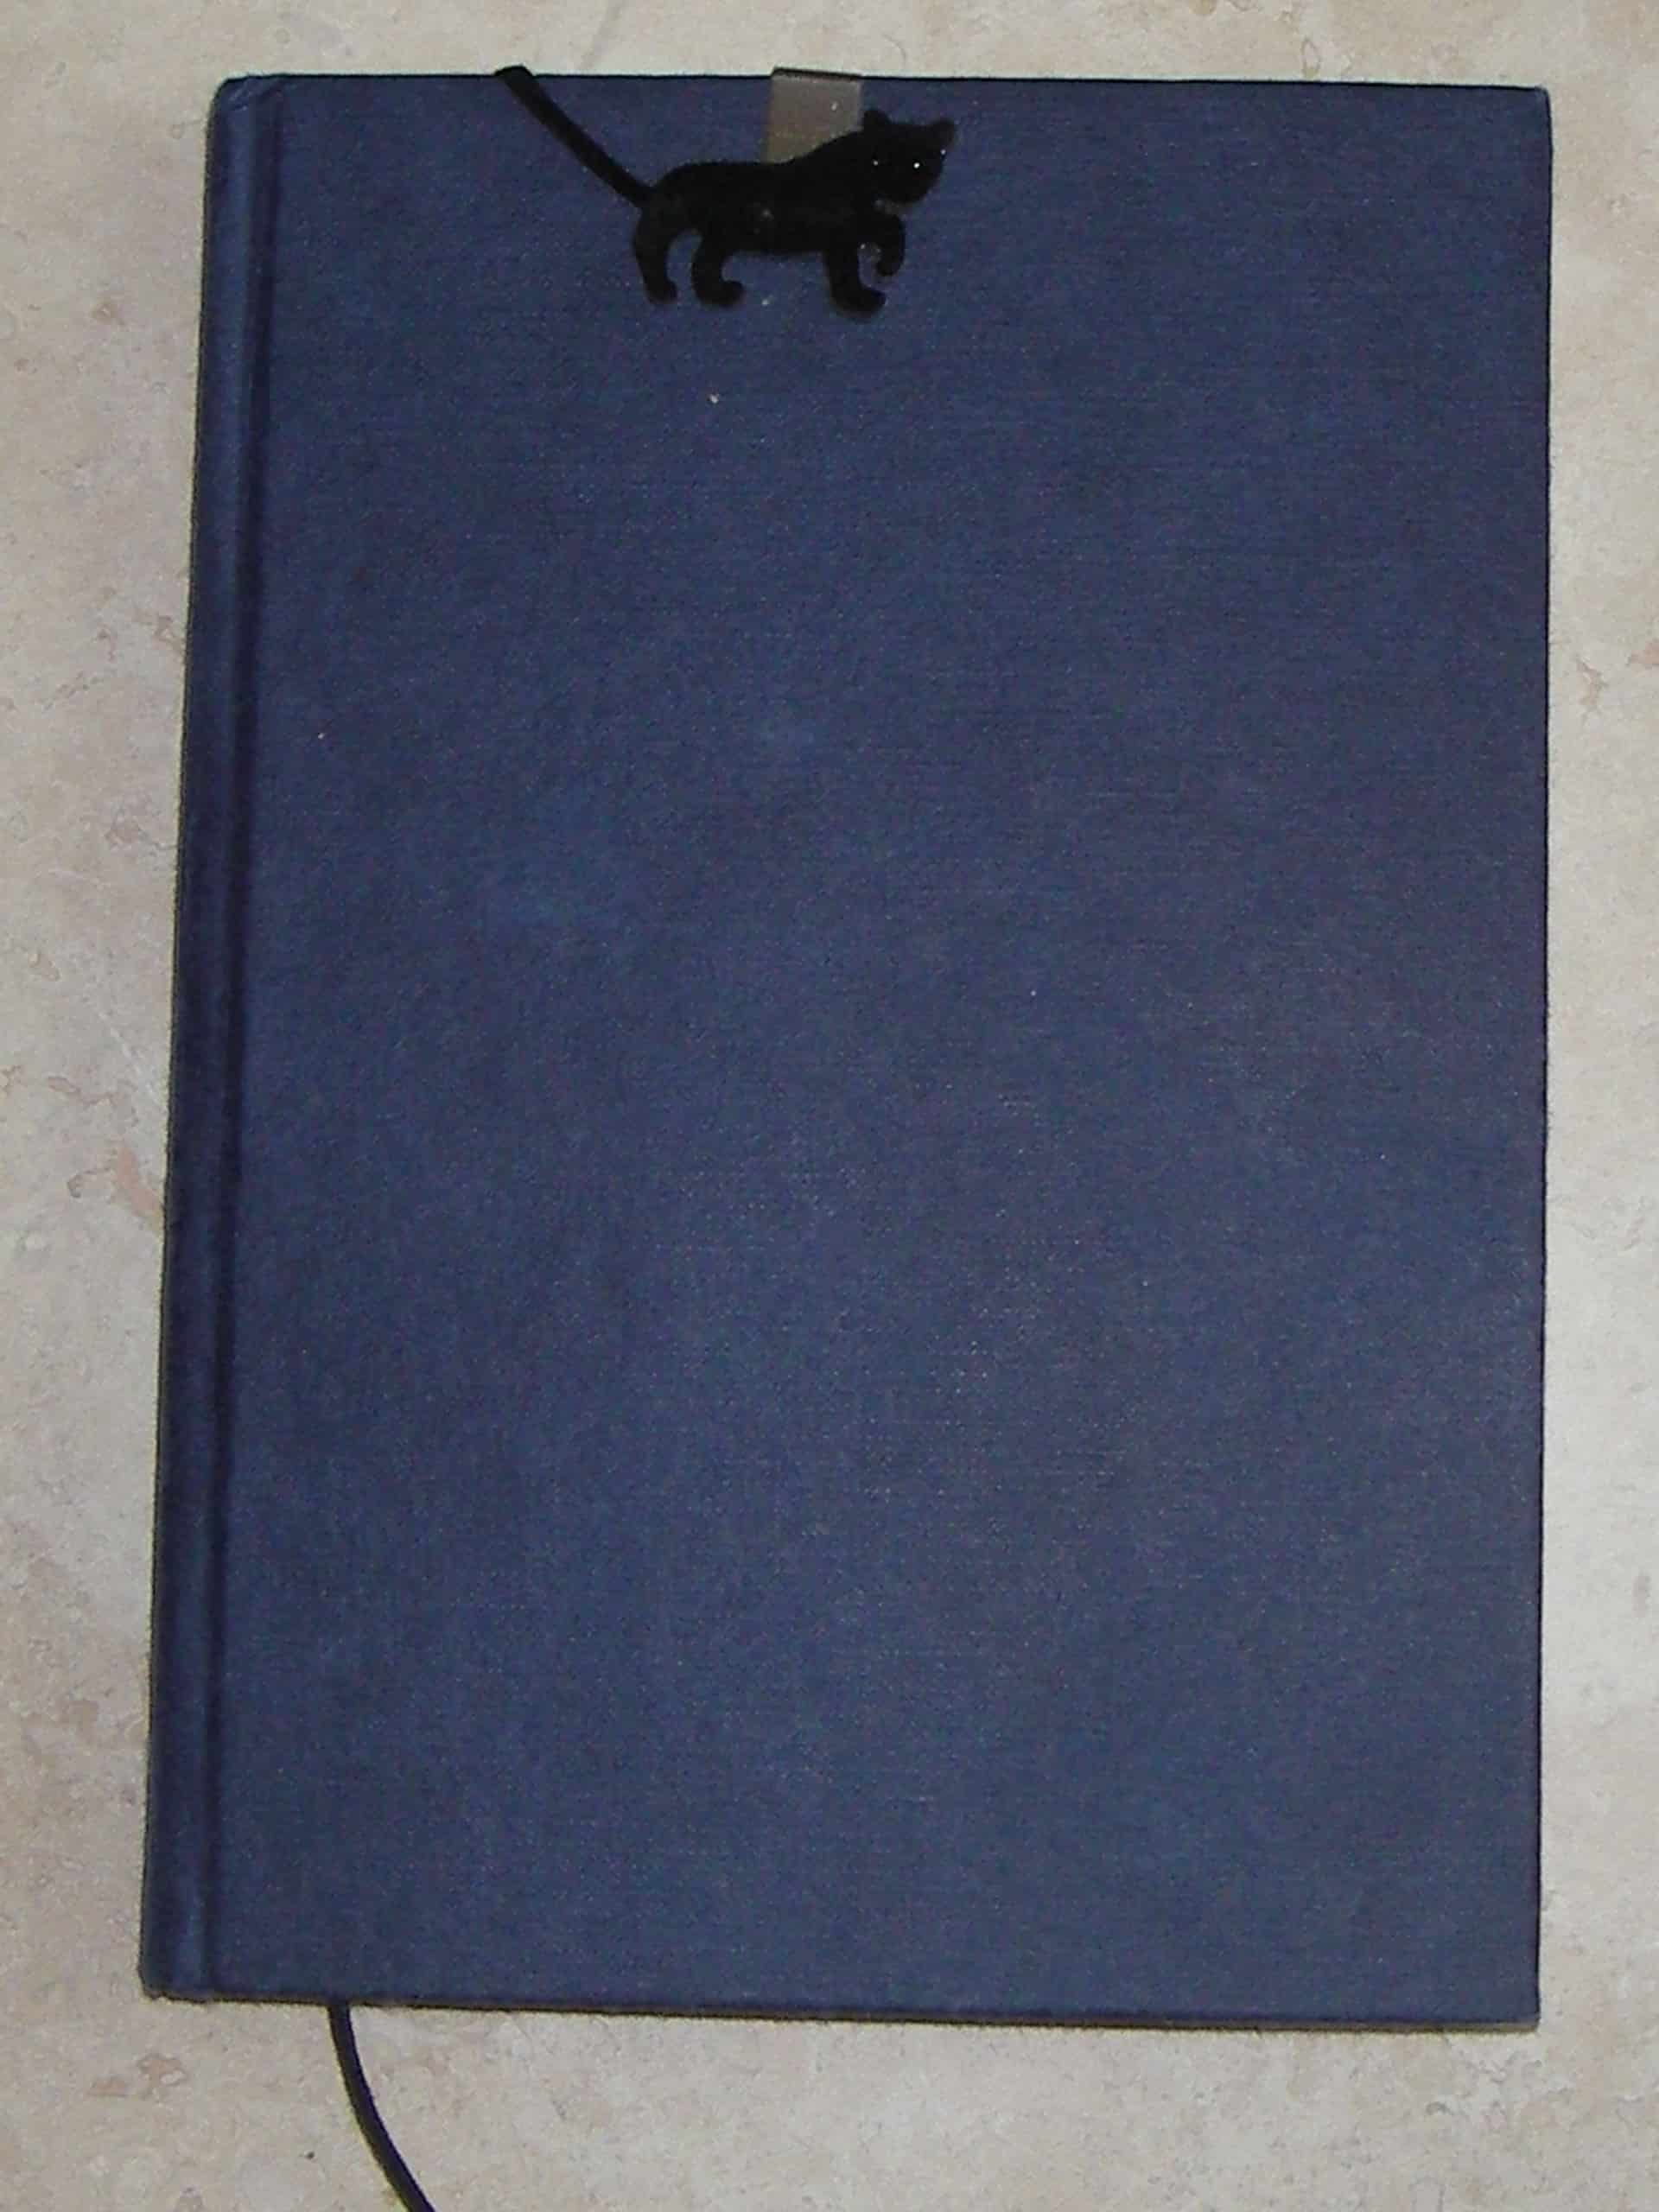 a blue hardback notebook